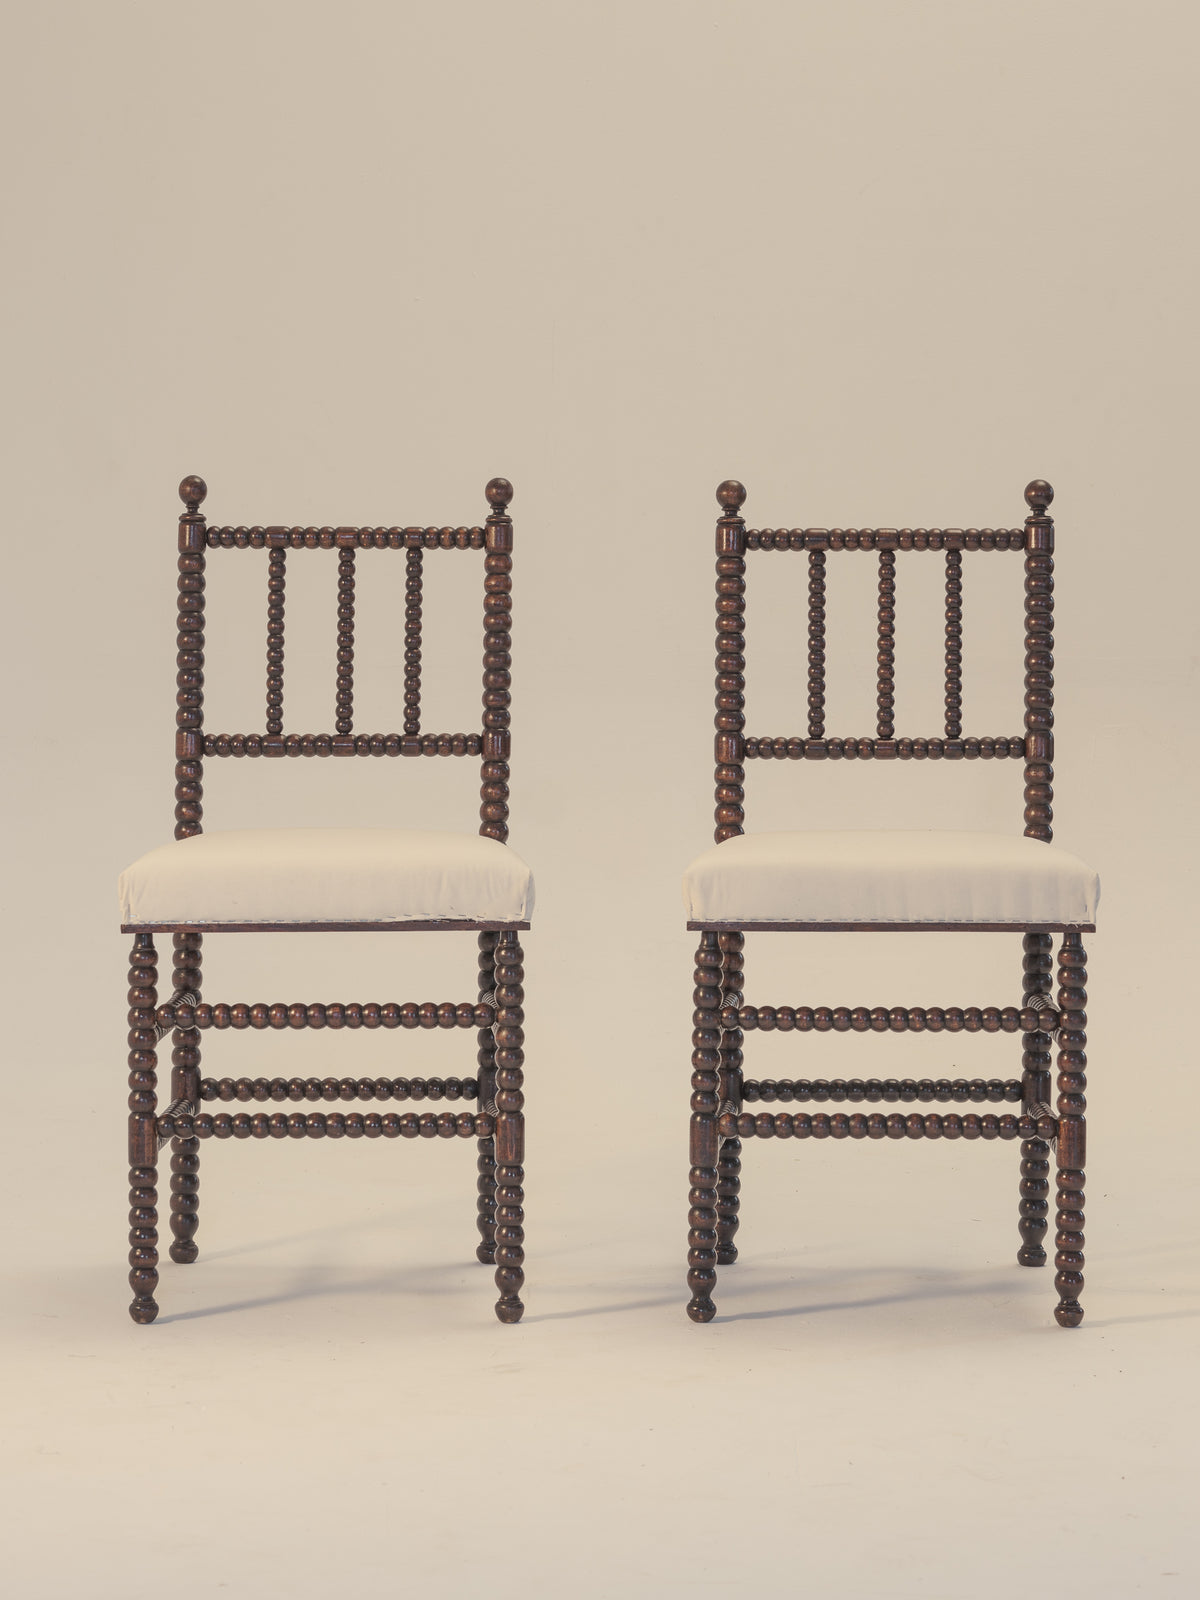 Pair of Bobbin Chairs